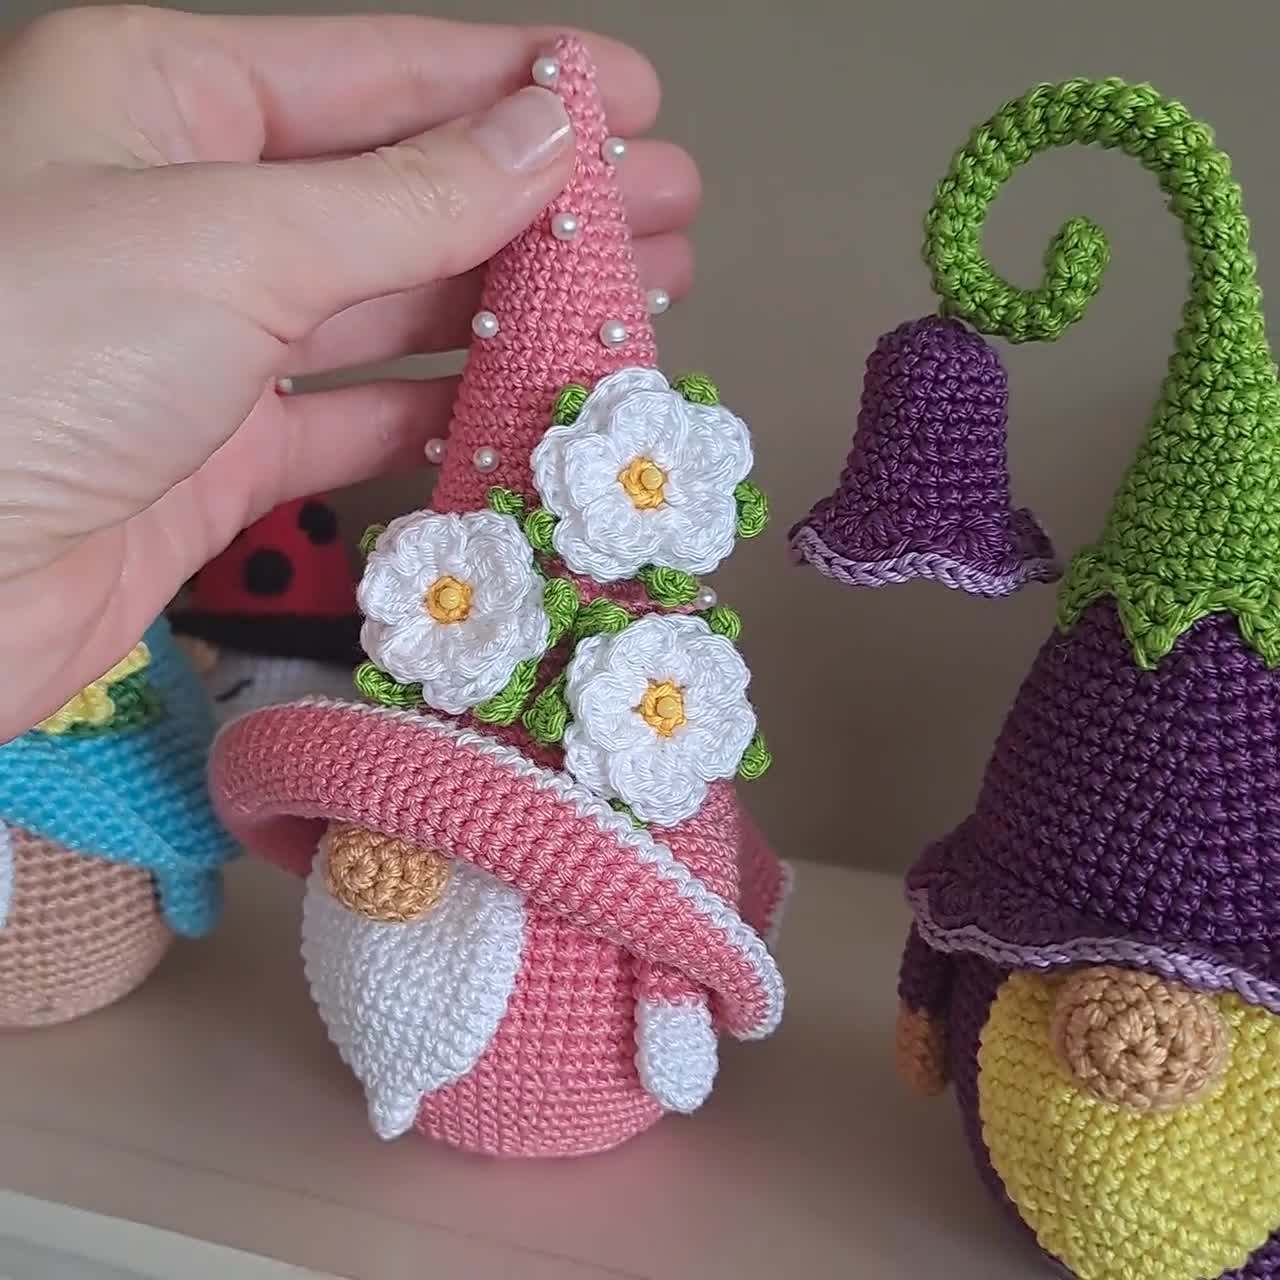 Crochet (Disney) Figment Amigurumi Pattern Review - Stacy's Stitches